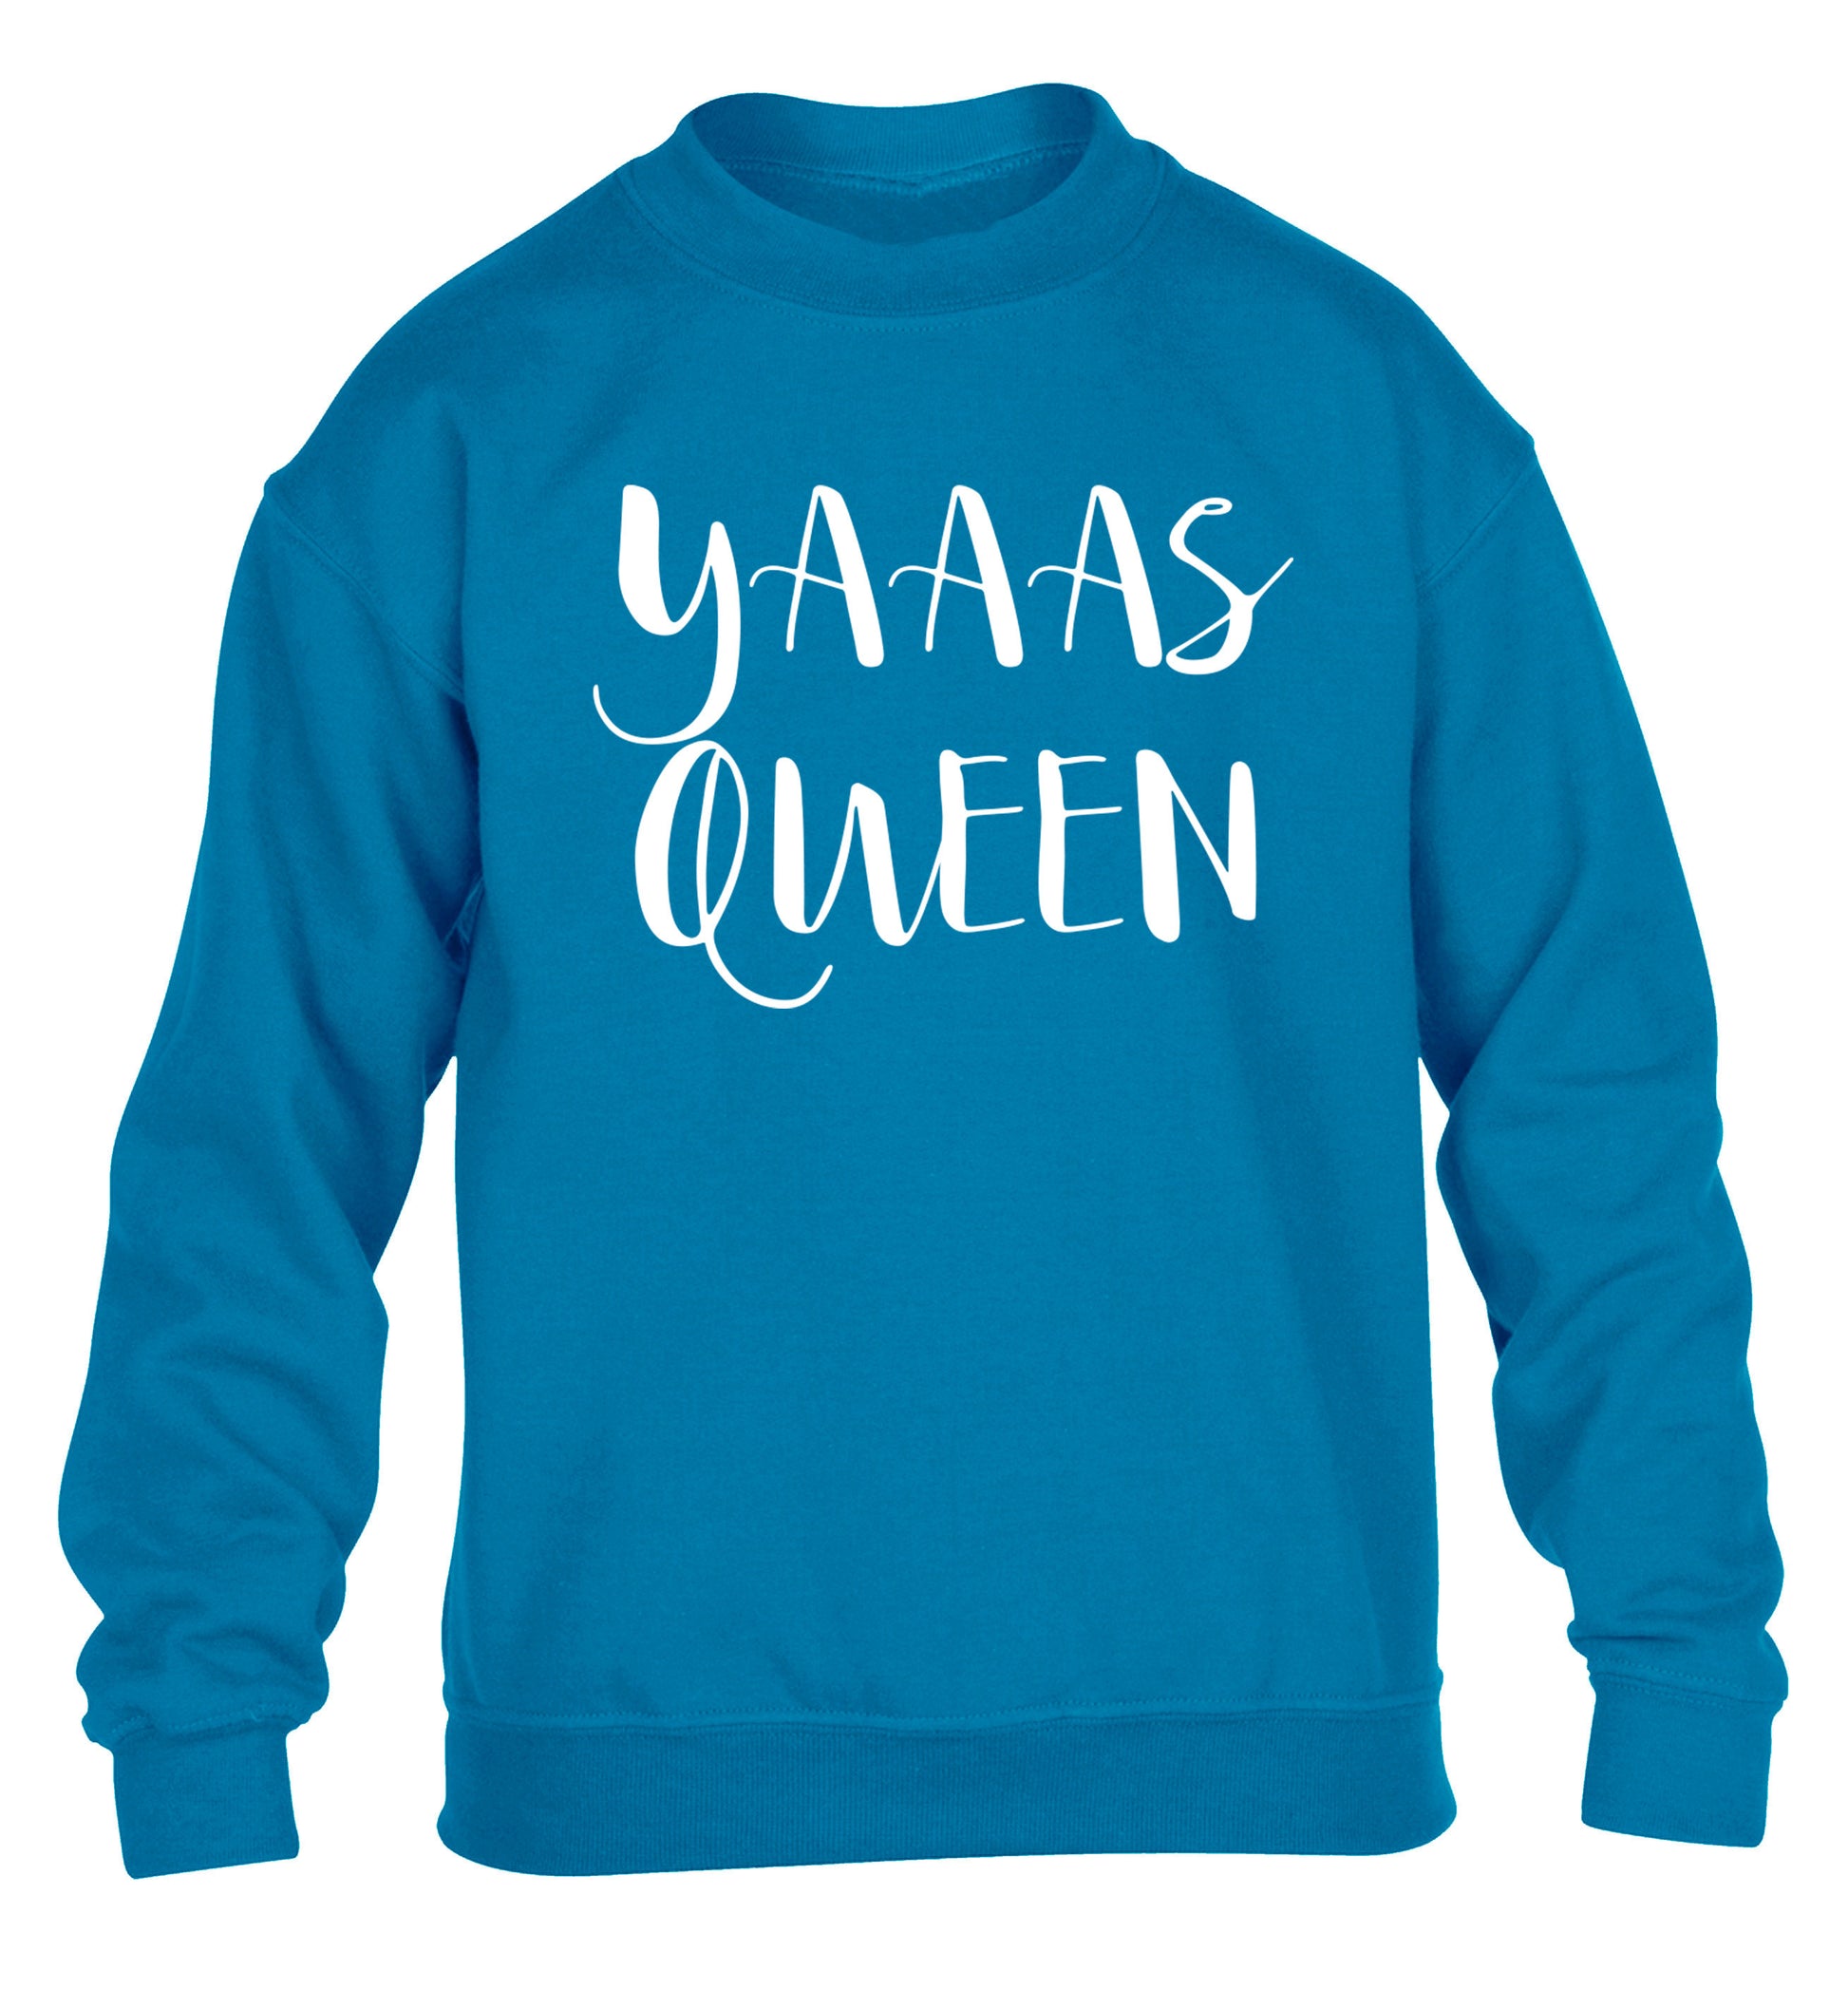 Yas Queen children's blue sweater 12-14 Years